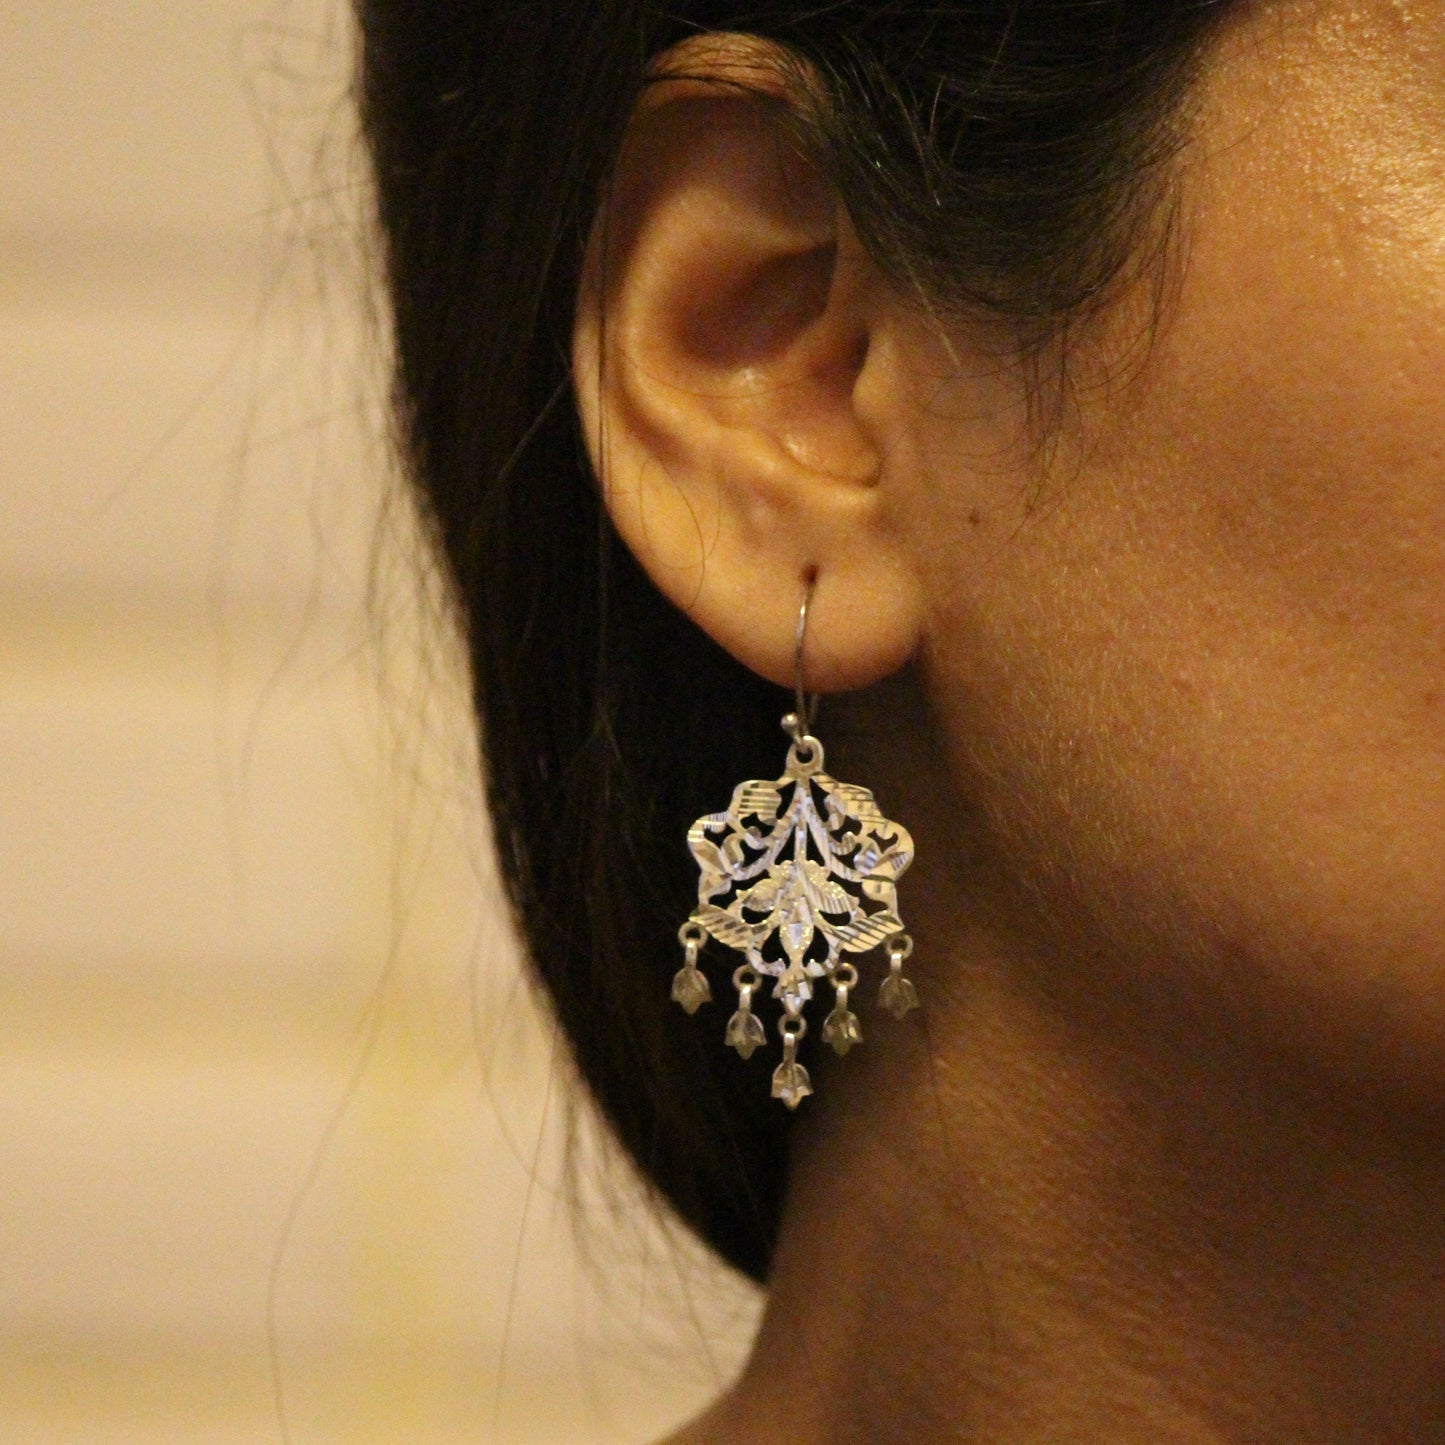 Sarah - Shiny Silver Earrings